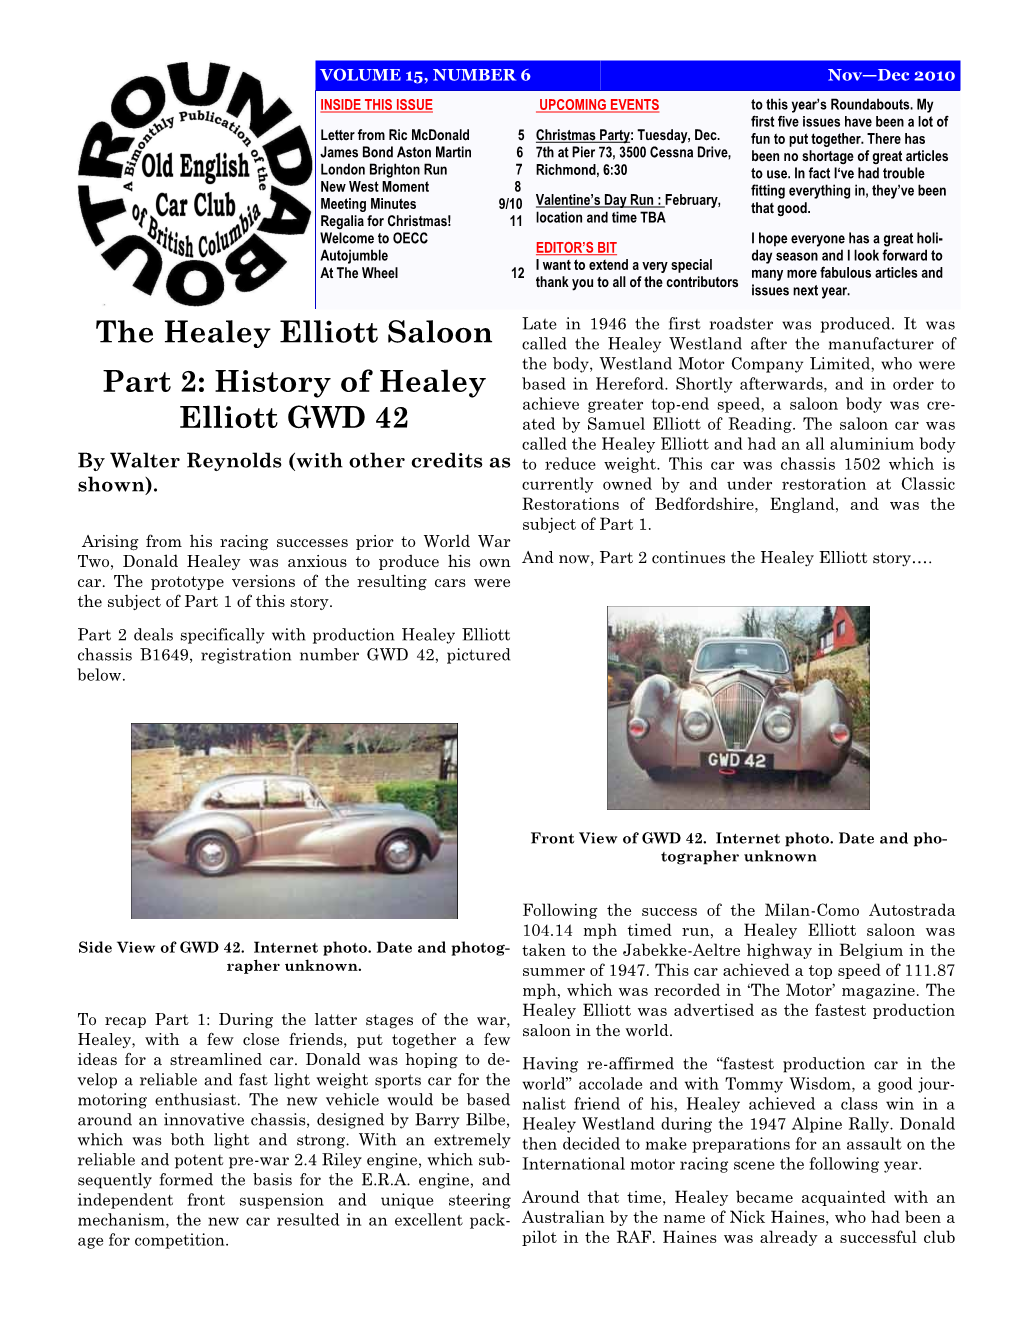 History of Healey Elliott GWD 42